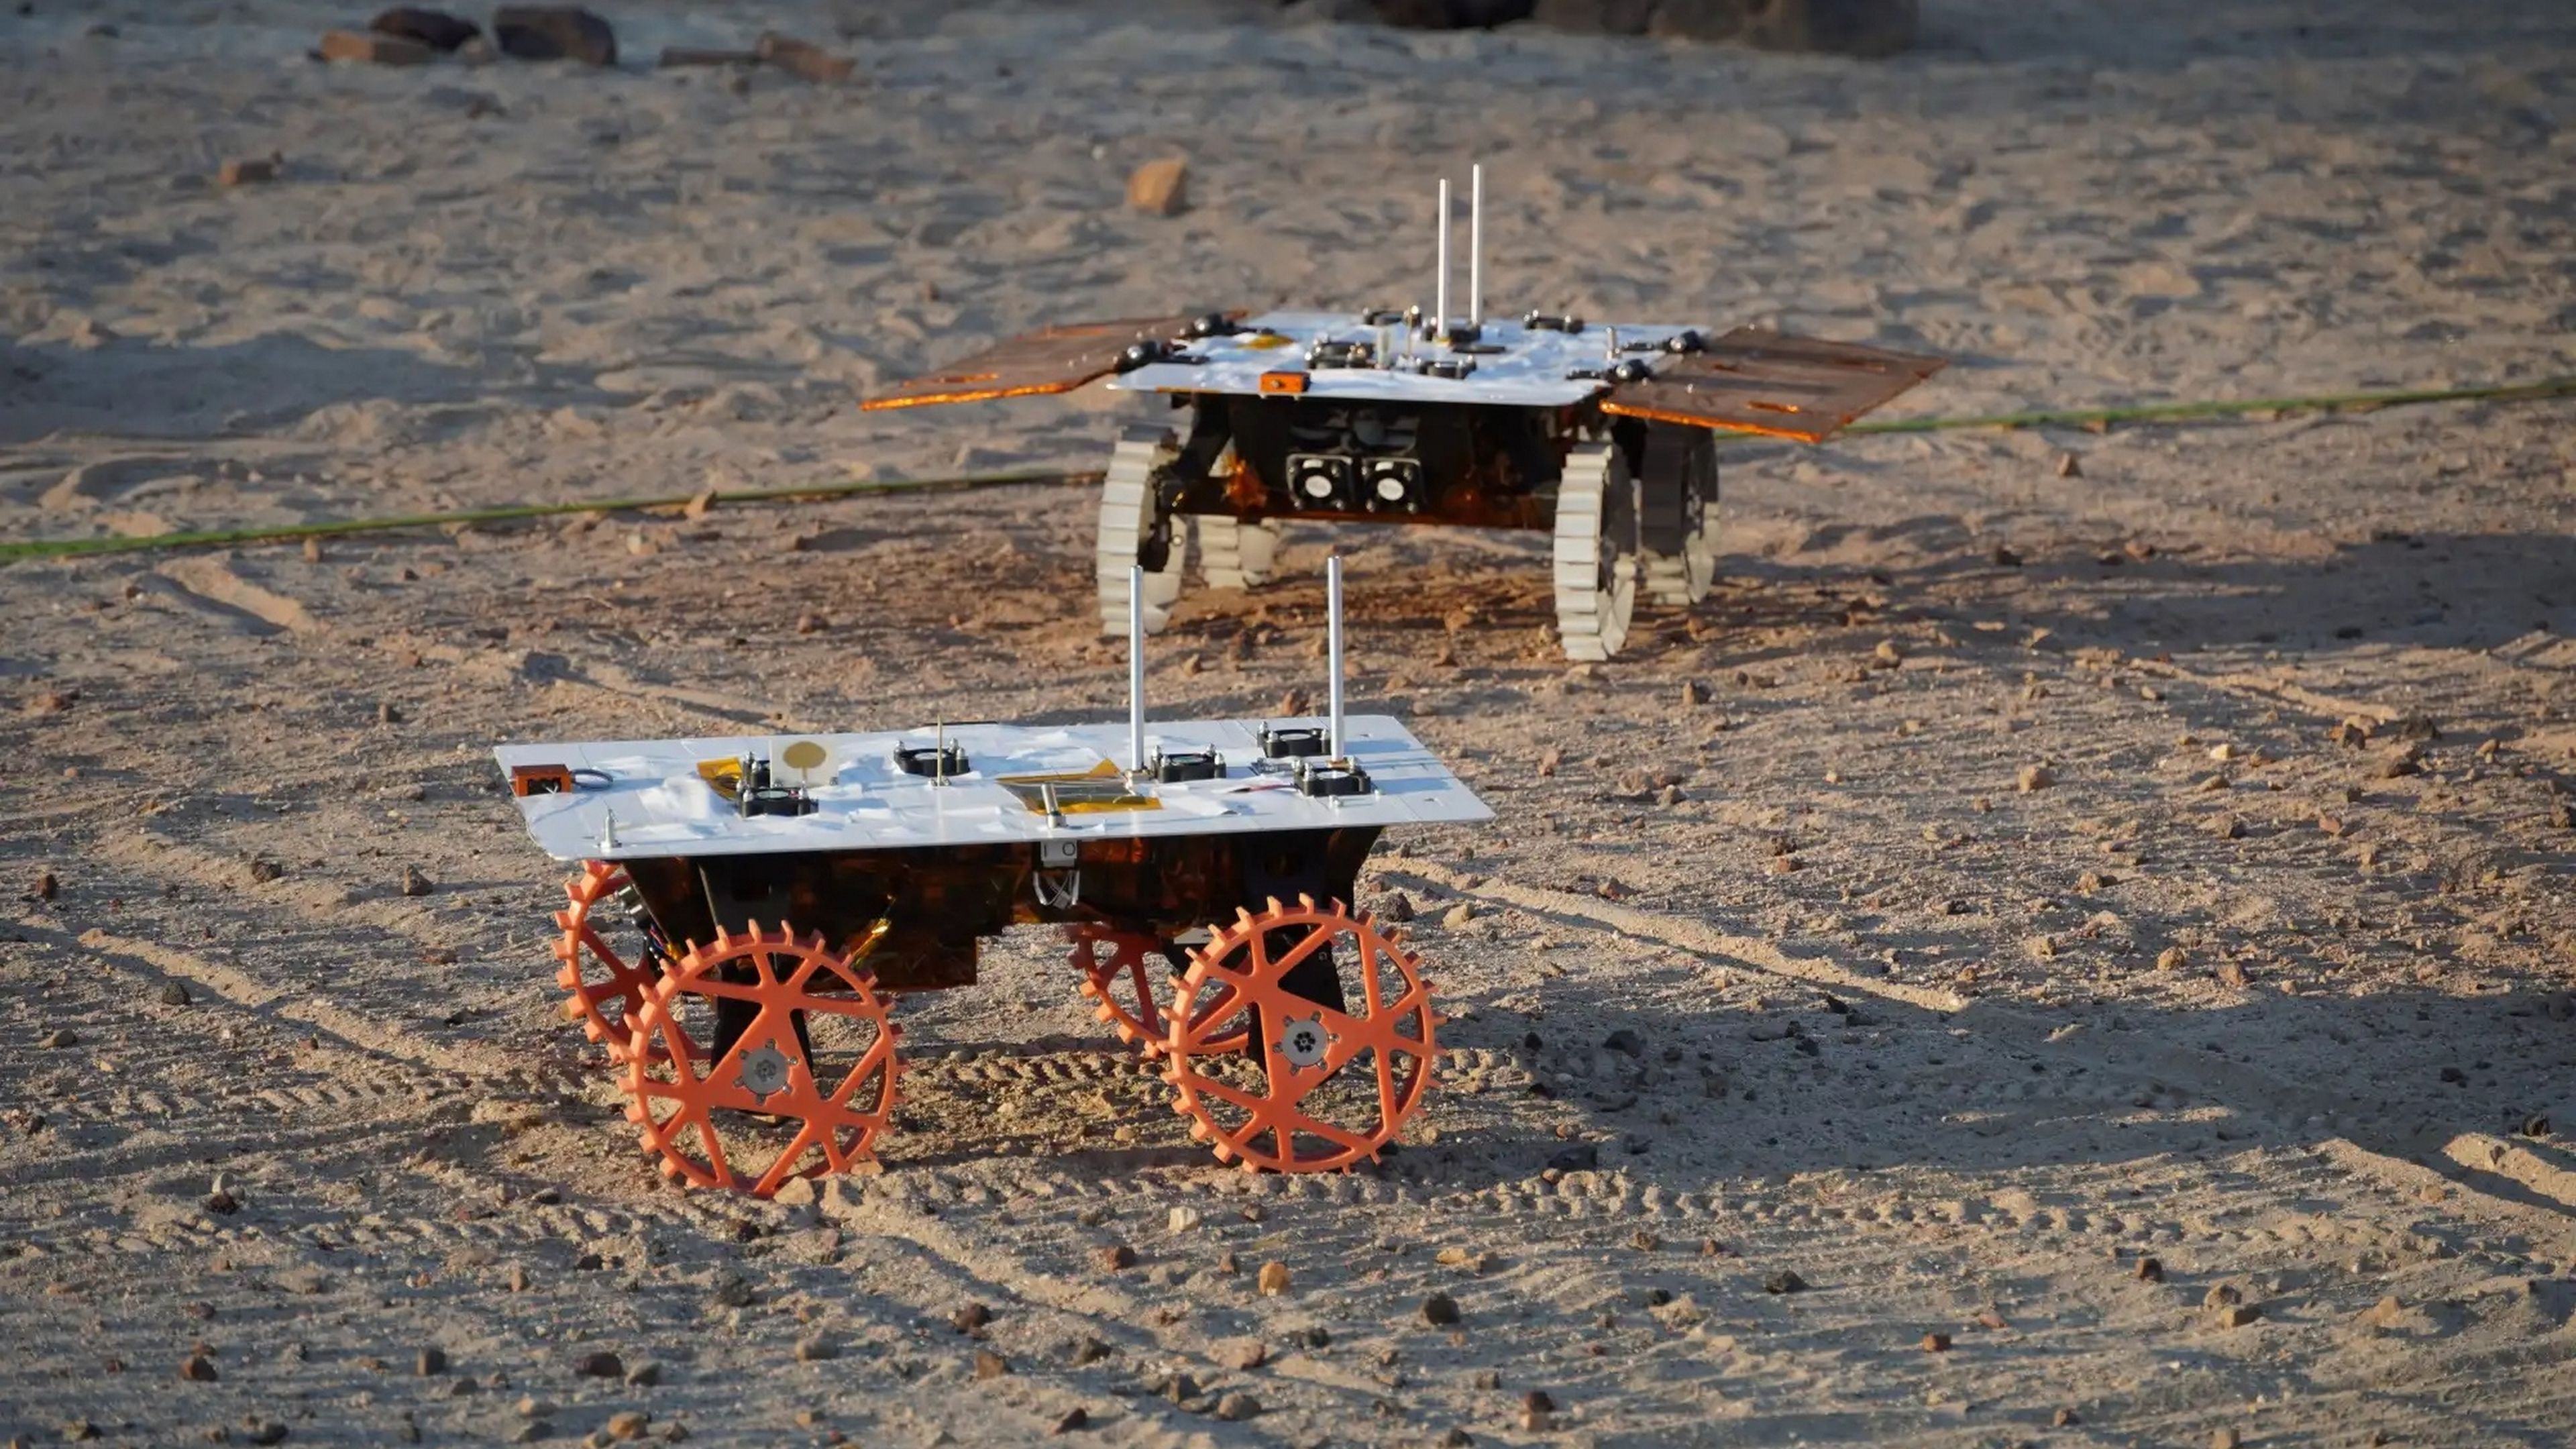 Mini rover autónomos de la NASA